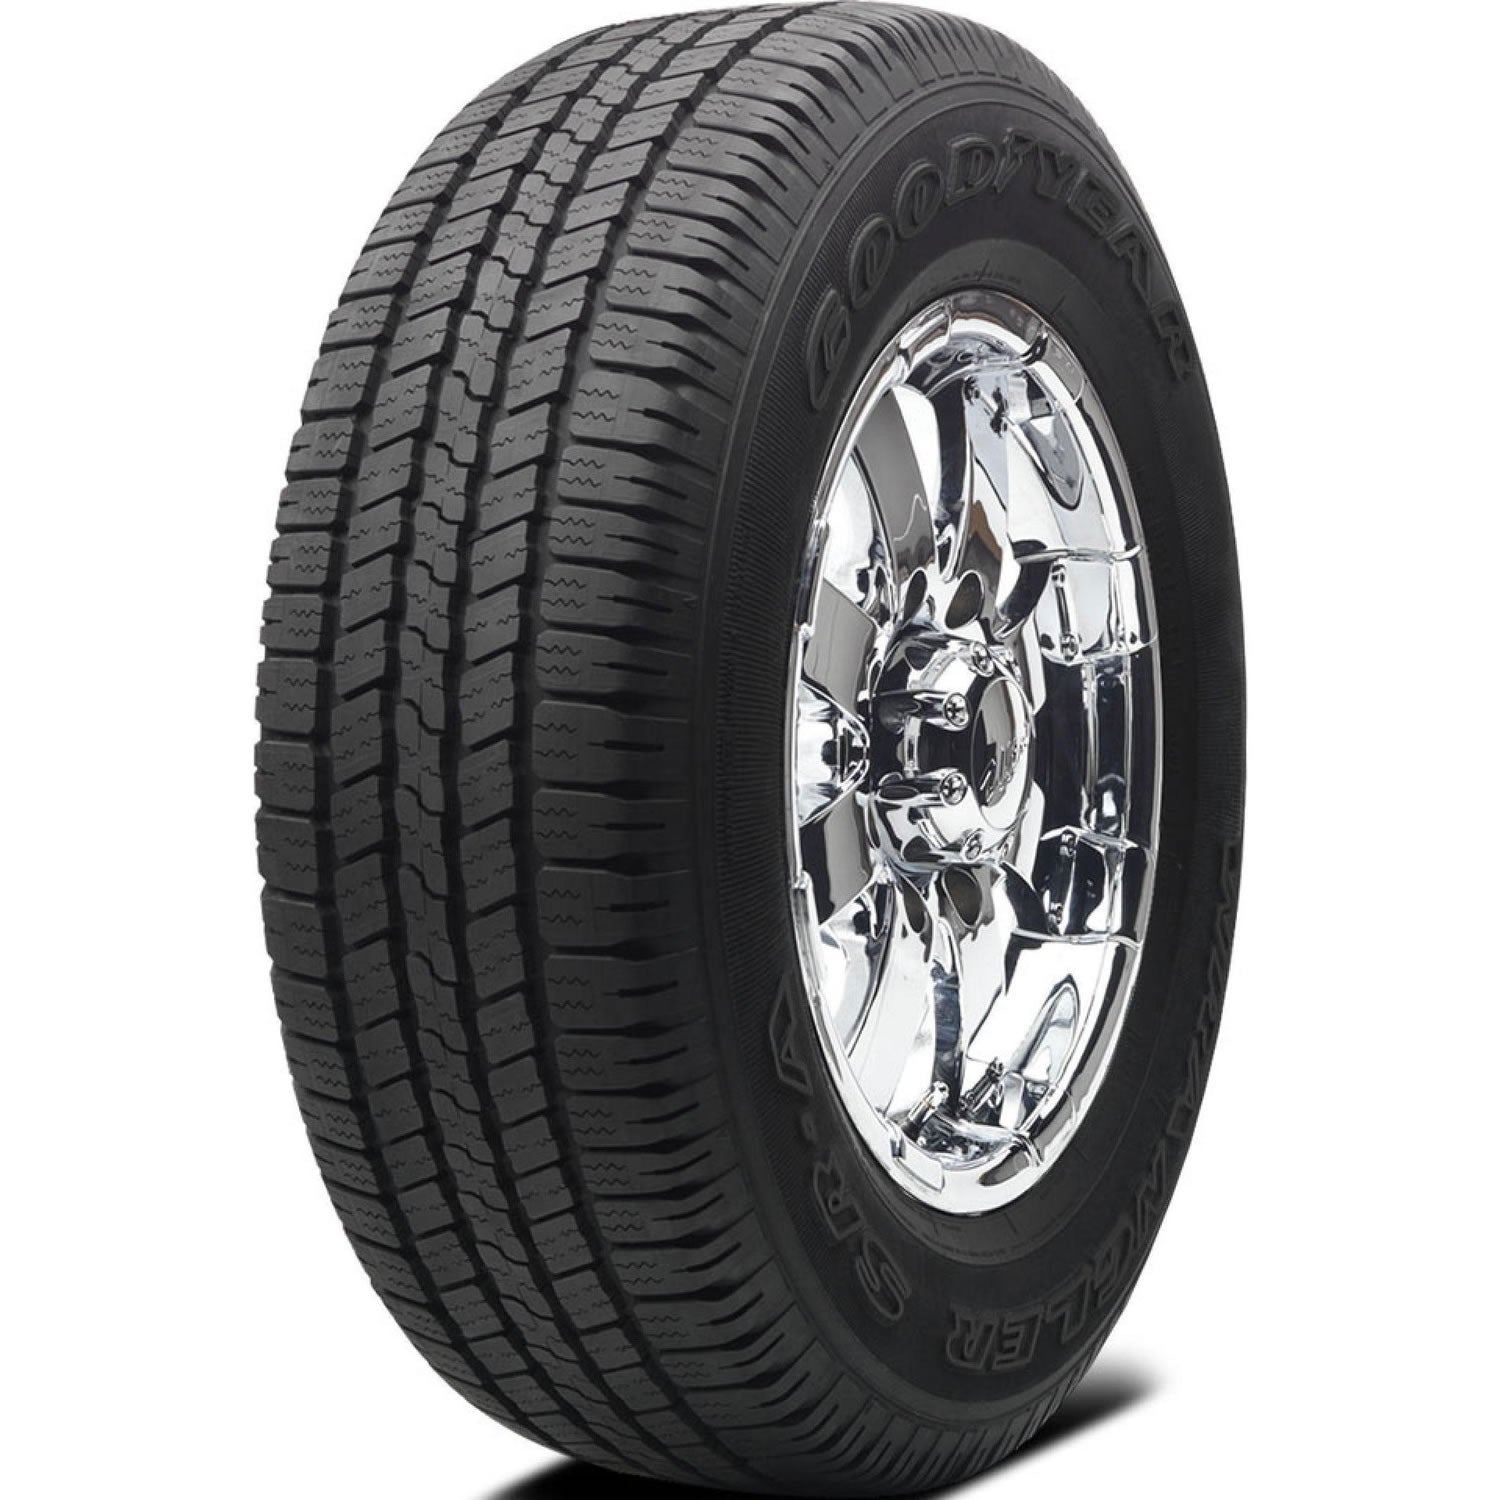 GOODYEAR WRANGLER SR-A LT225/75R16 (29.3X8.9R 16) Tires